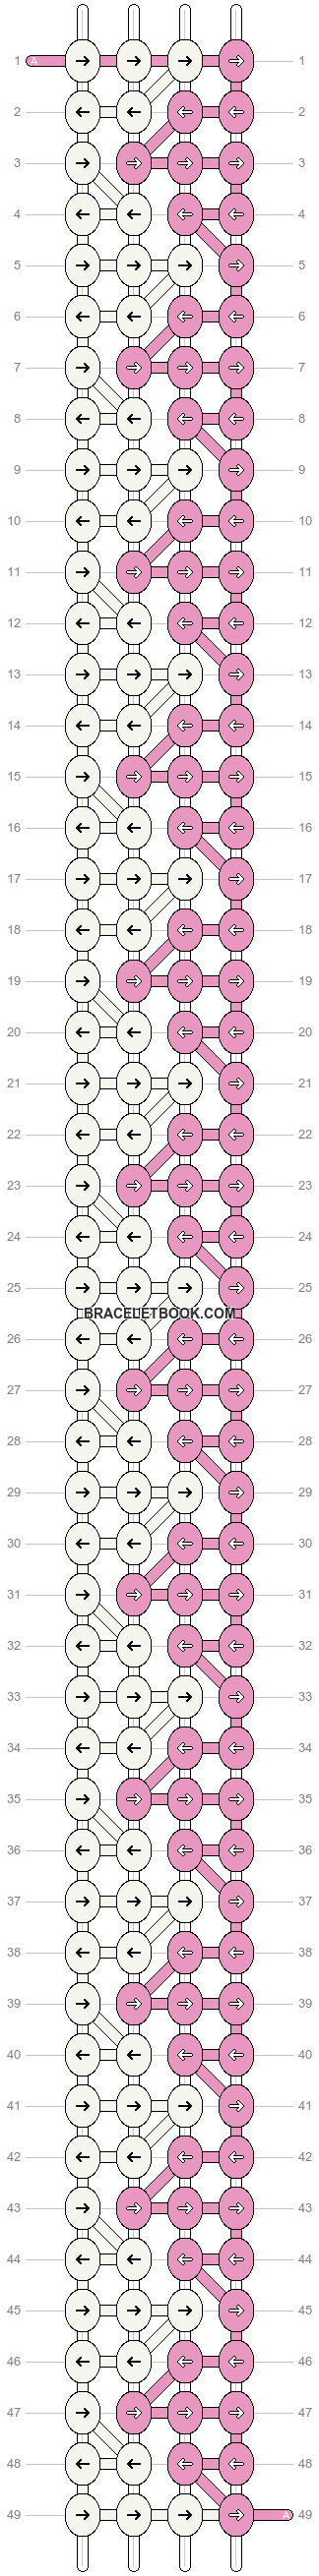 Alpha pattern #16840 variation #192244 pattern